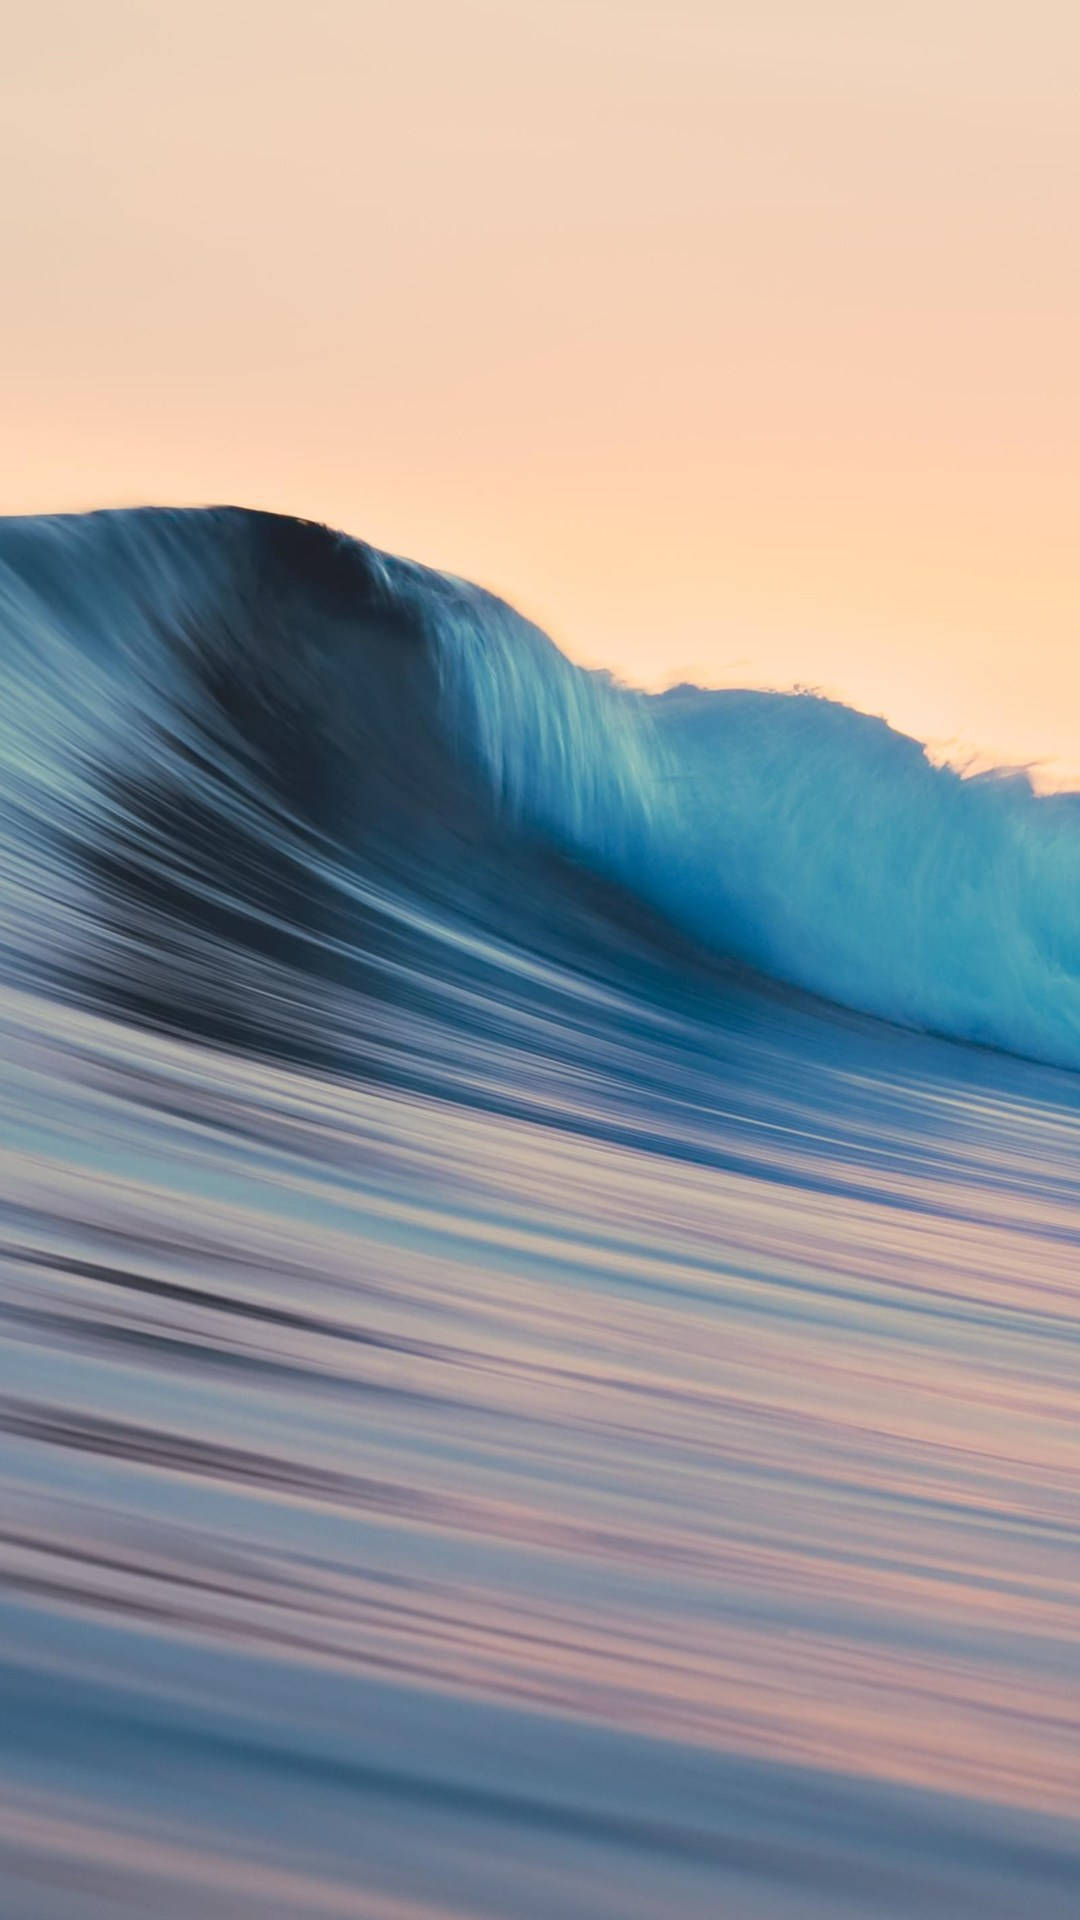 Crashing Wave Samsung Galaxy S4 Wallpaper